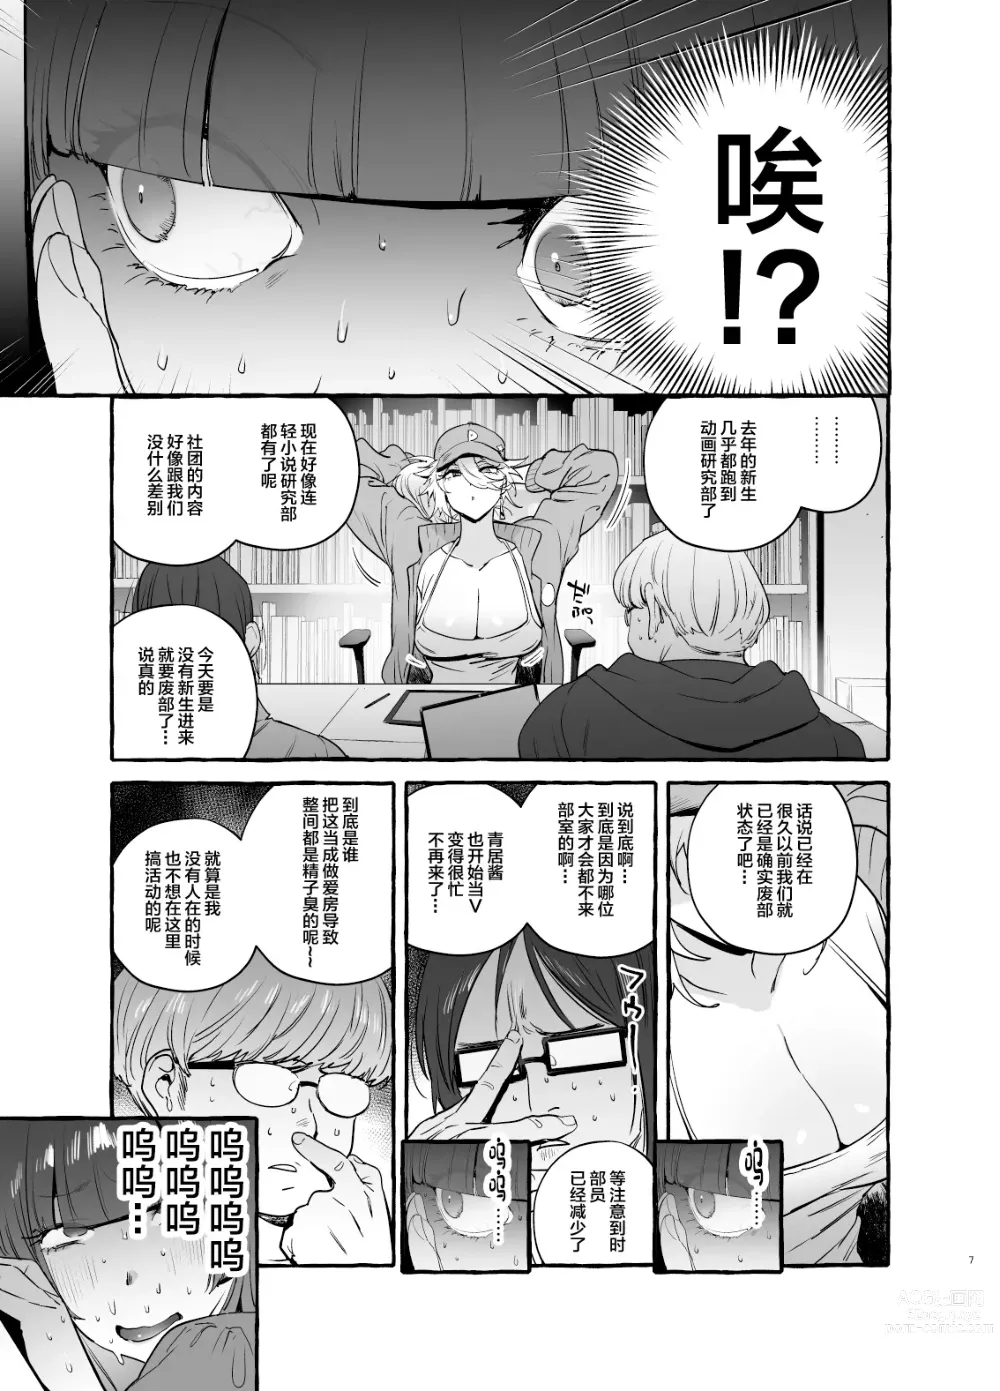 Page 9 of doujinshi Wotasa no Gyaru VS Jirai Otoko